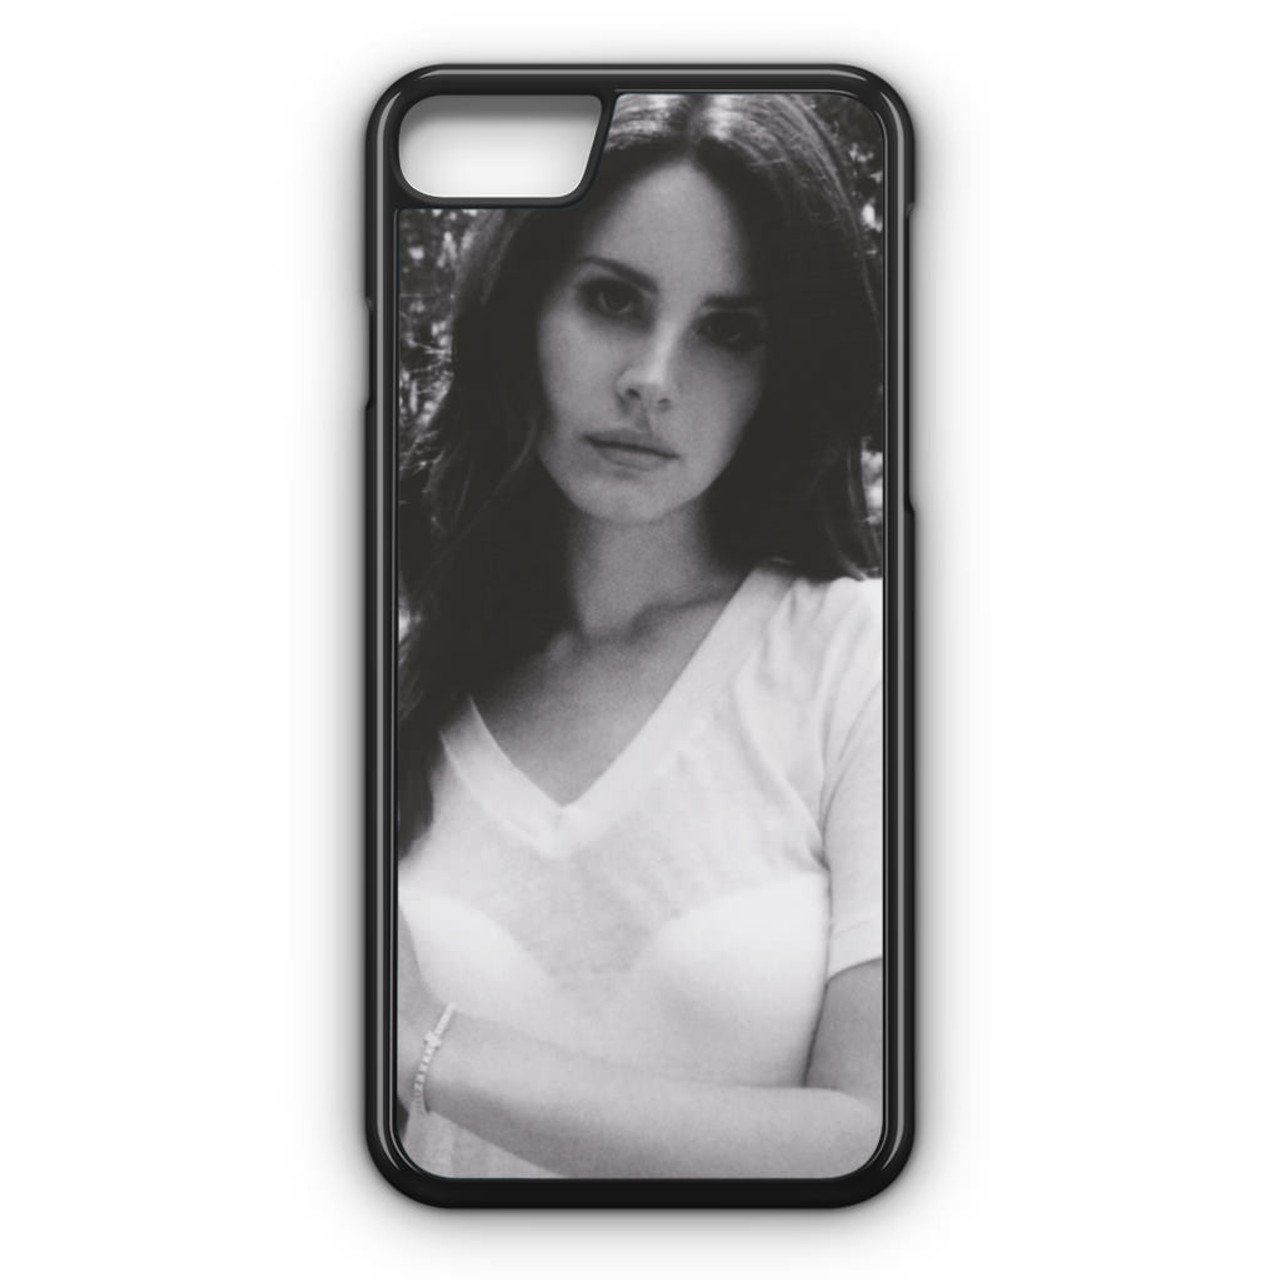 Lana Del Rey Ultraviolence Iphone 8 Case